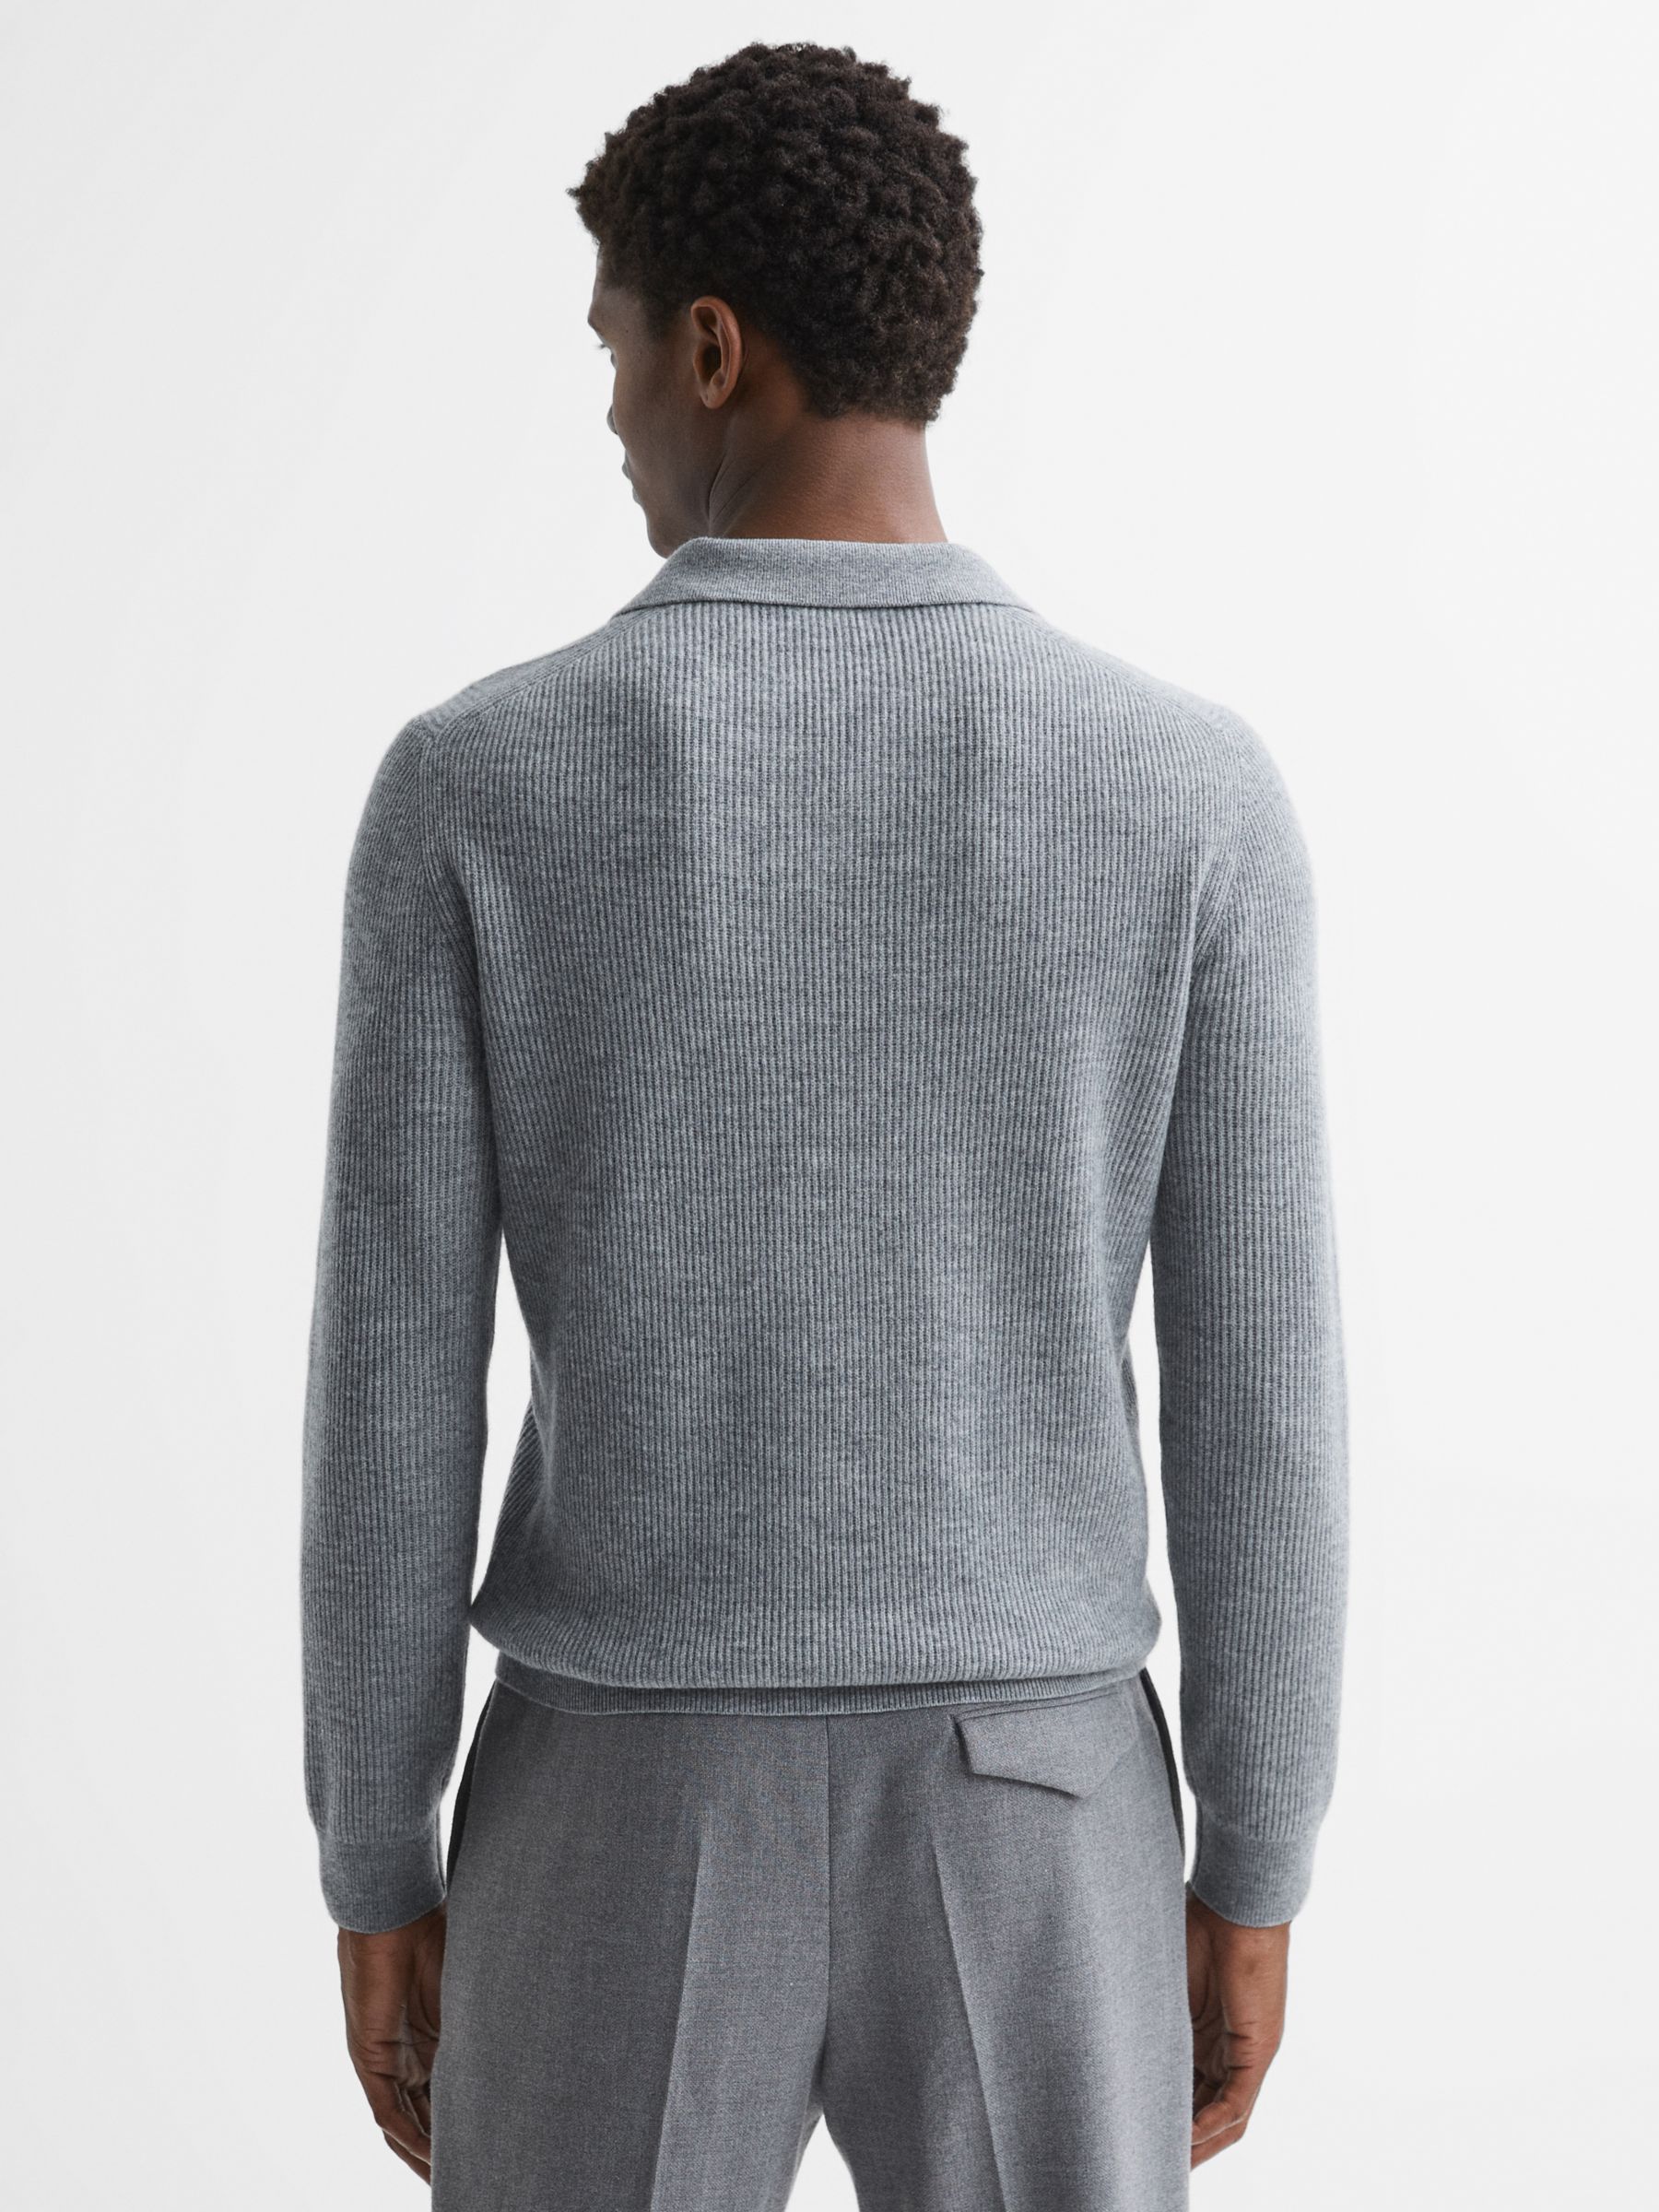 Reiss Malik Long Sleeve Knitted Polo Shirt, Grey at John Lewis & Partners